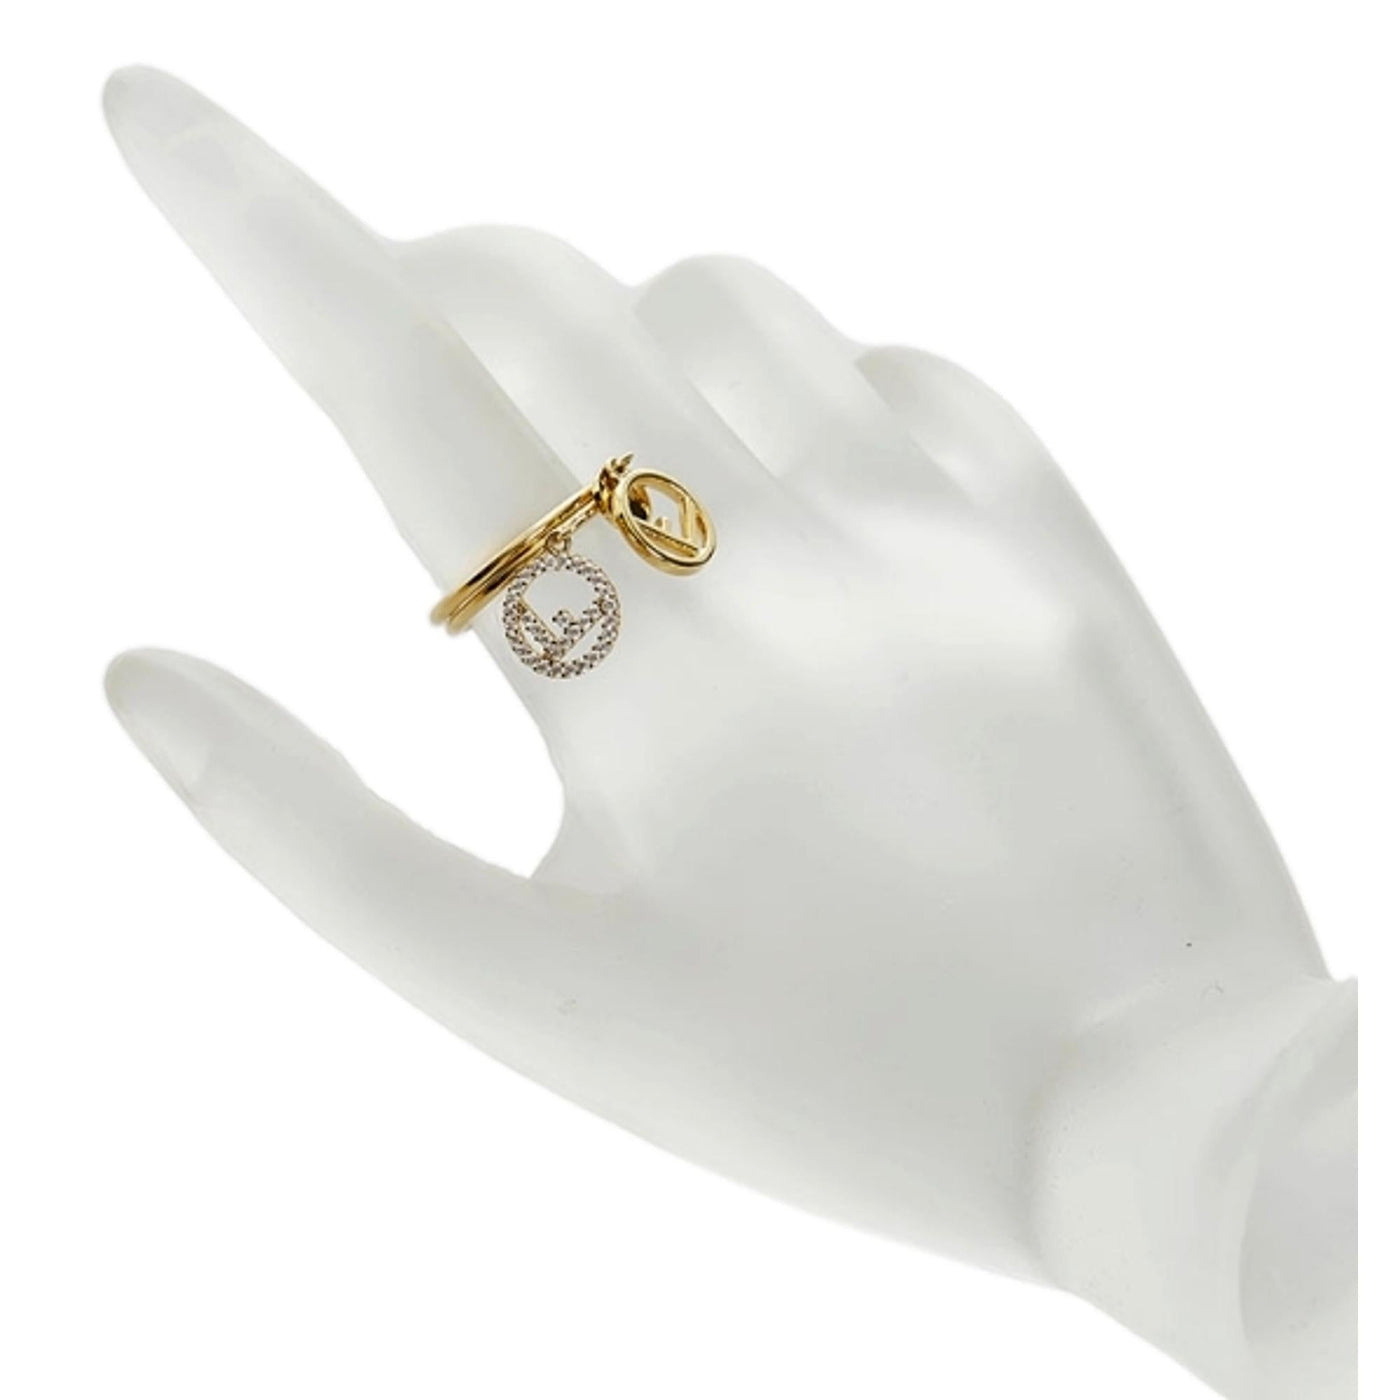 Fendi F is Fendi Soft Gold and Crystal Ring Size 6.5 8AG737 - LUXURYMRKT